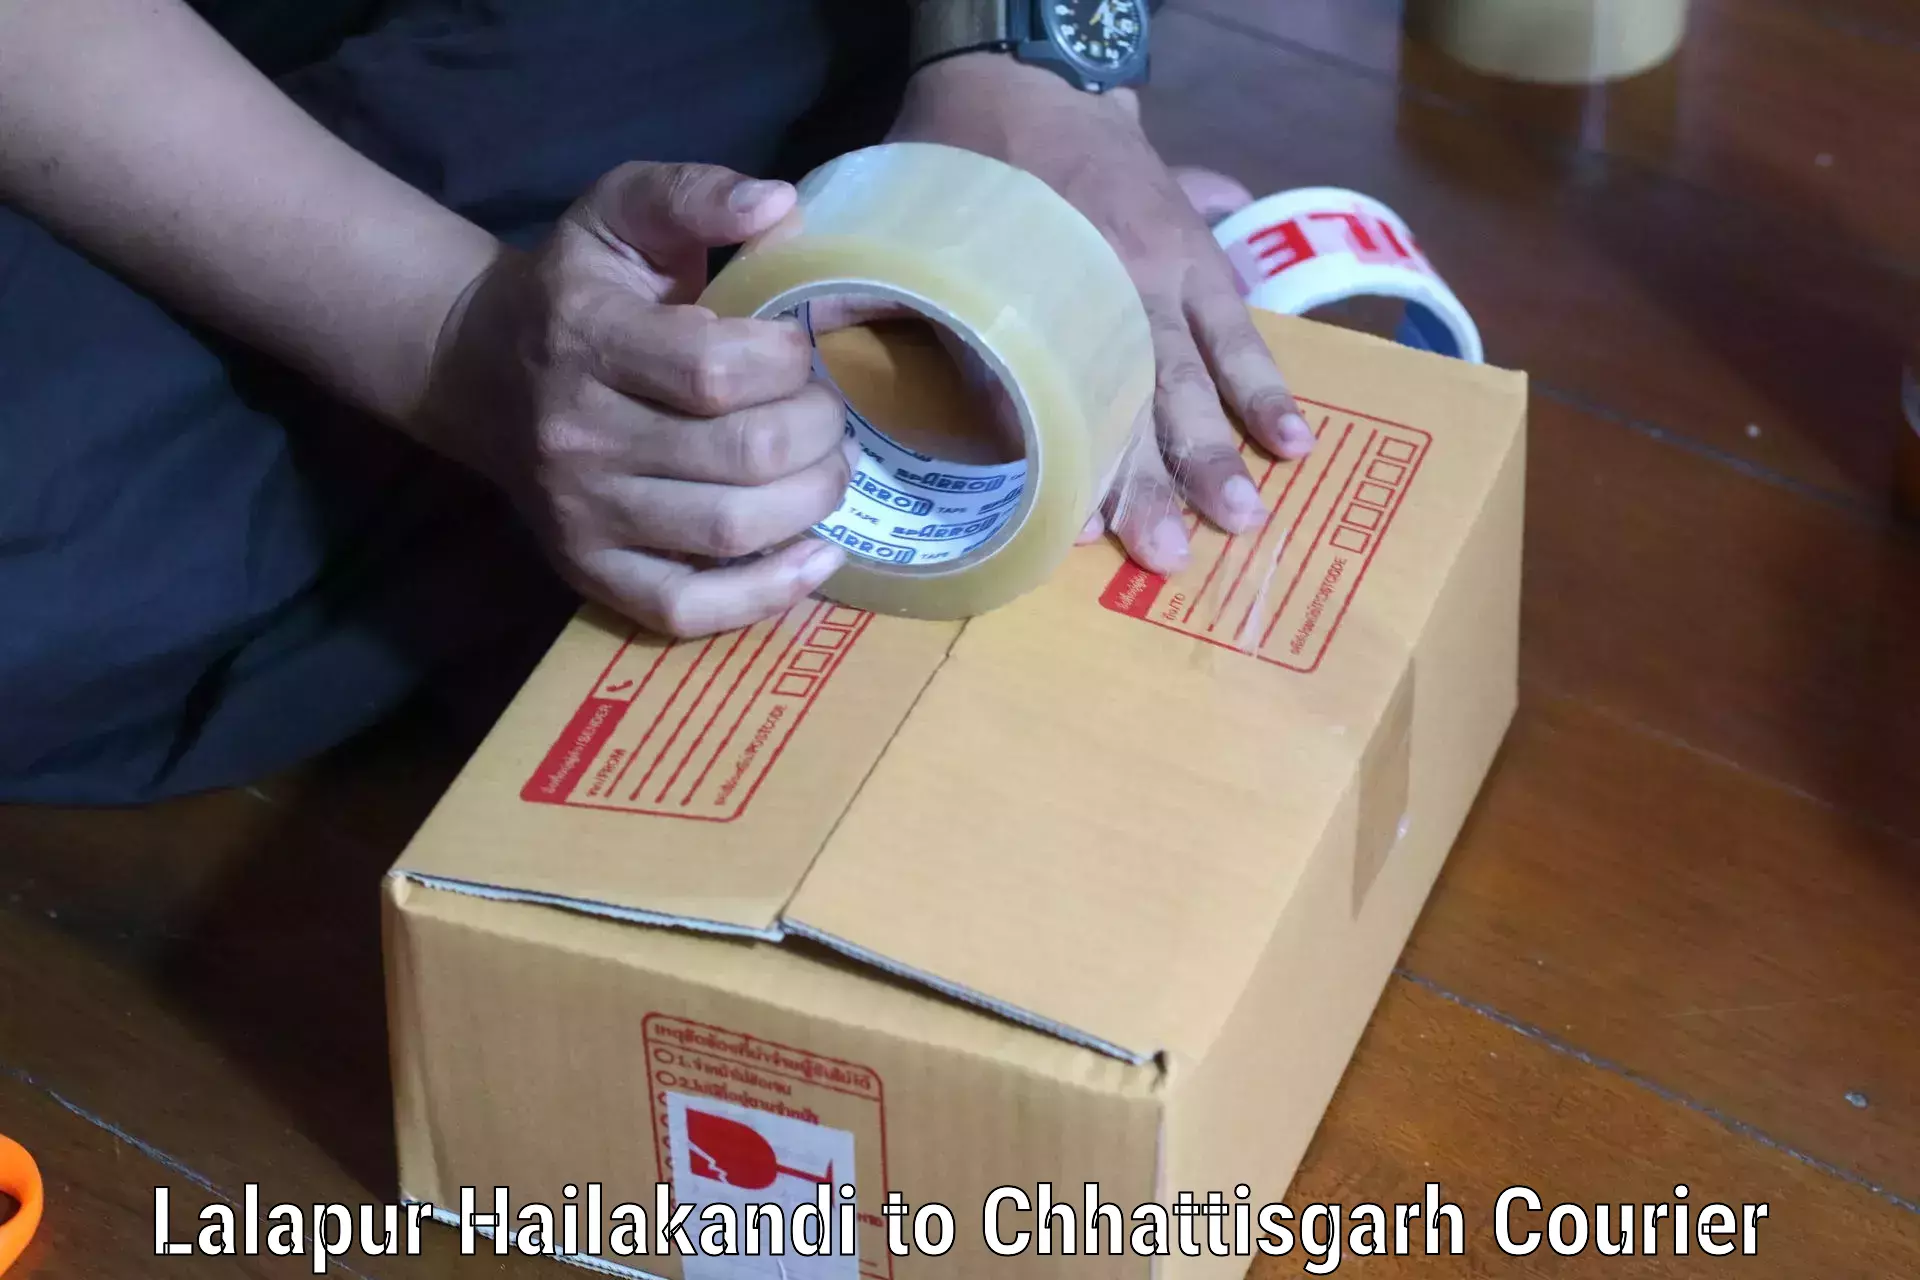 Multi-city courier Lalapur Hailakandi to Chhattisgarh